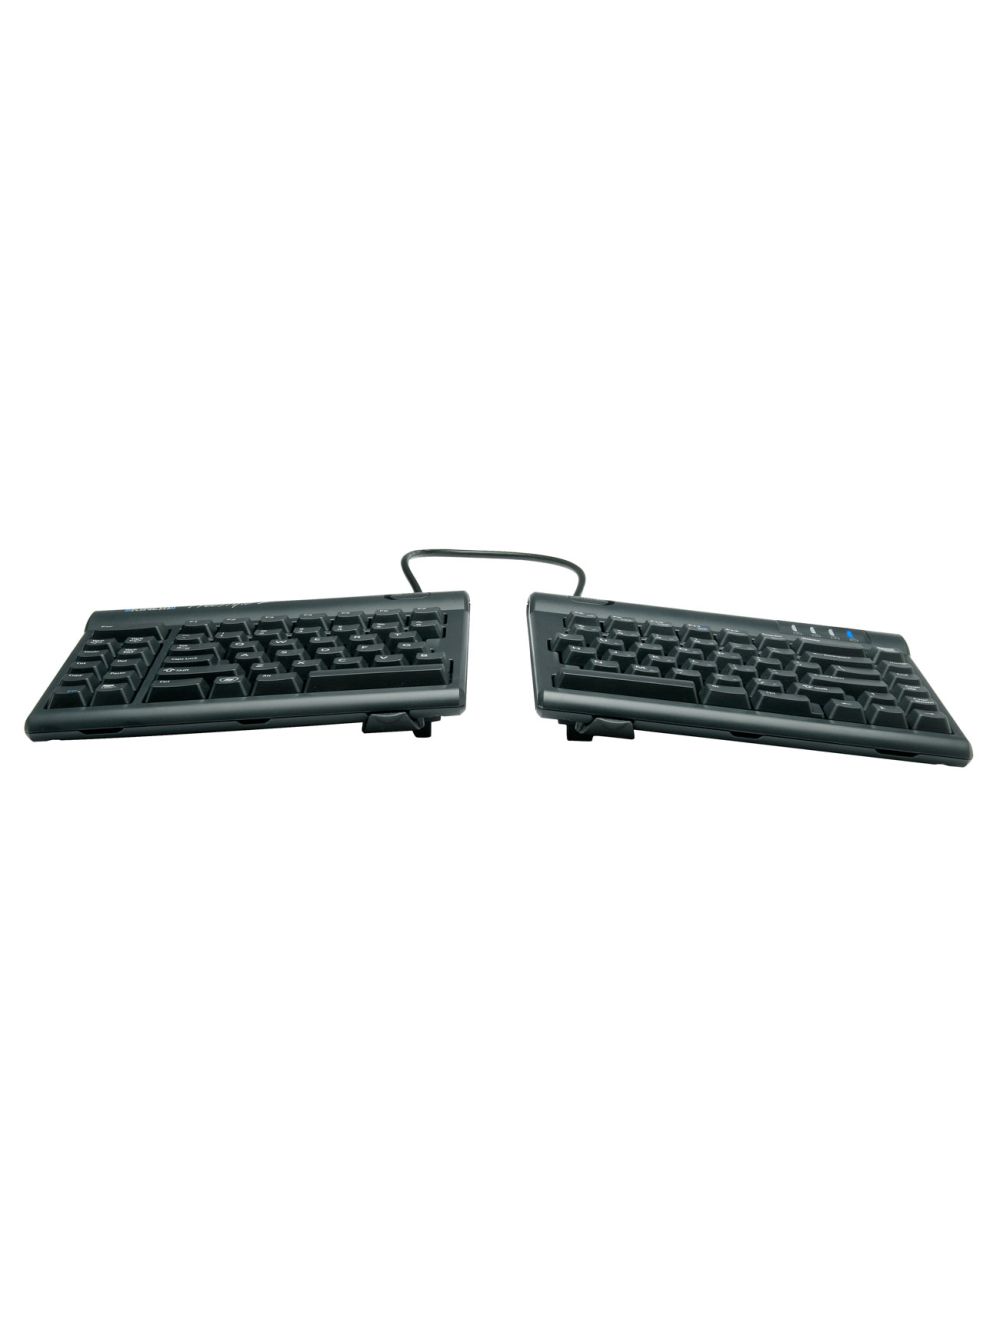 Kinesis Freestyle2 v3, teclado ergonómico dividido ajustable